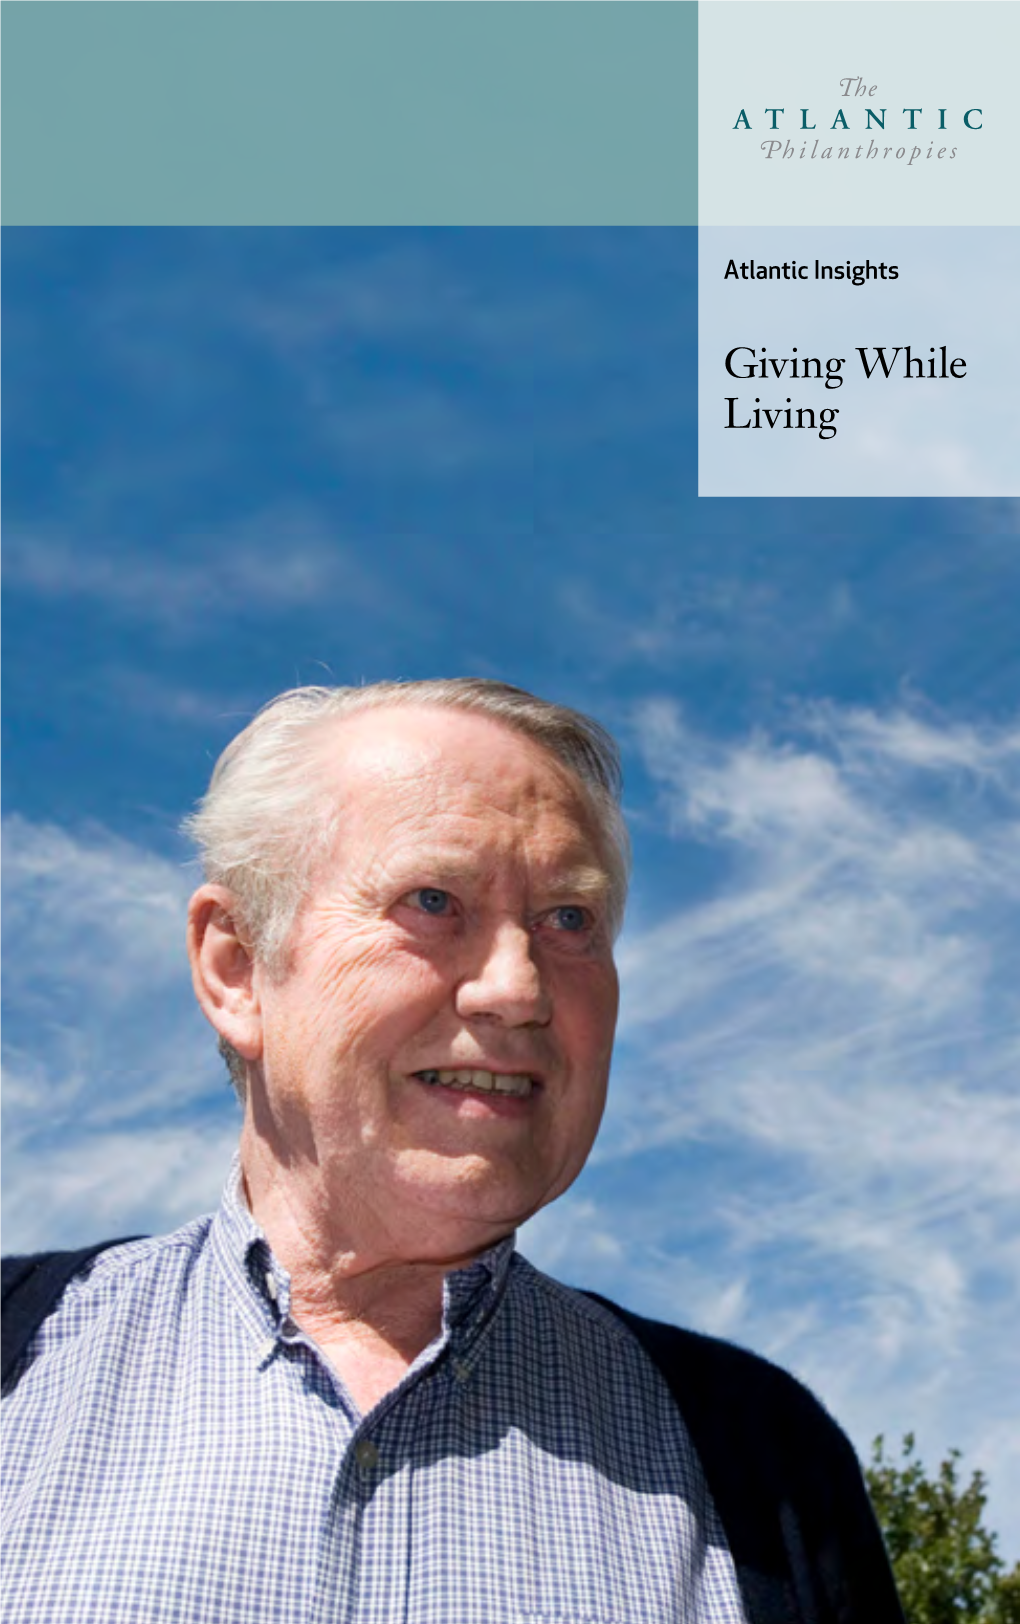 Giving While Living Chuck Feeney, Founding Chairman of the Atlantic Philanthropies